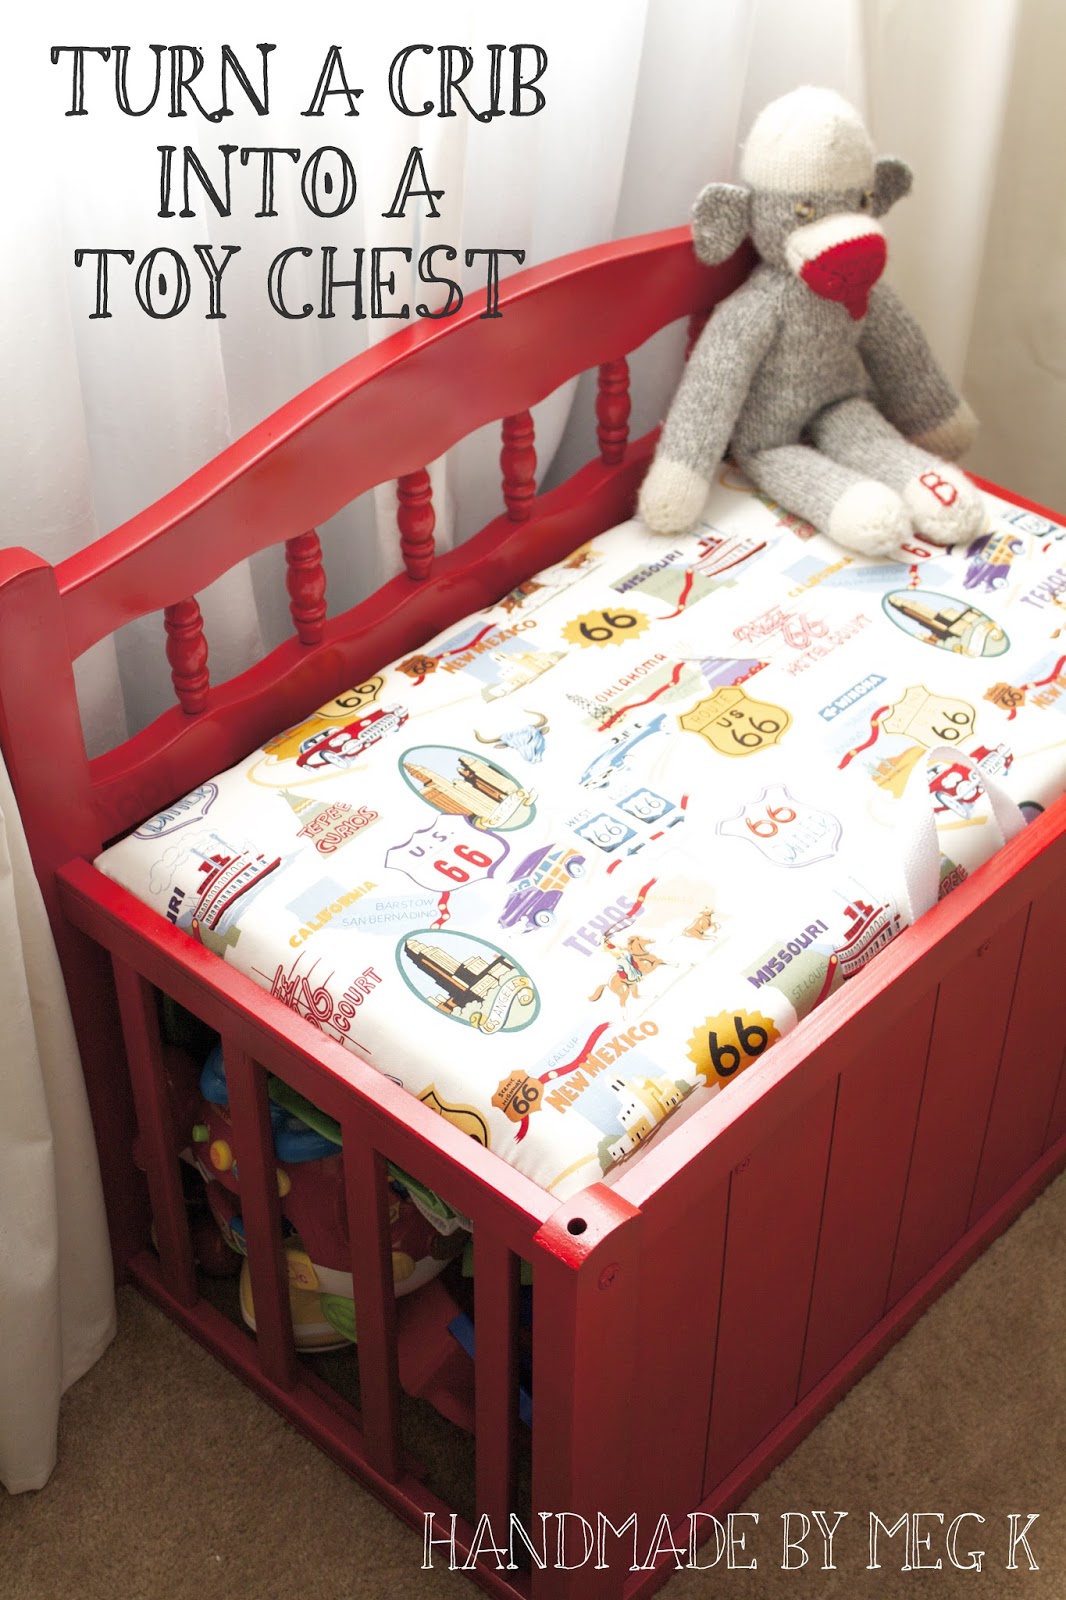 DIY upholstered toy chest of an old crib (via handmadebymegk.blogspot.ru)